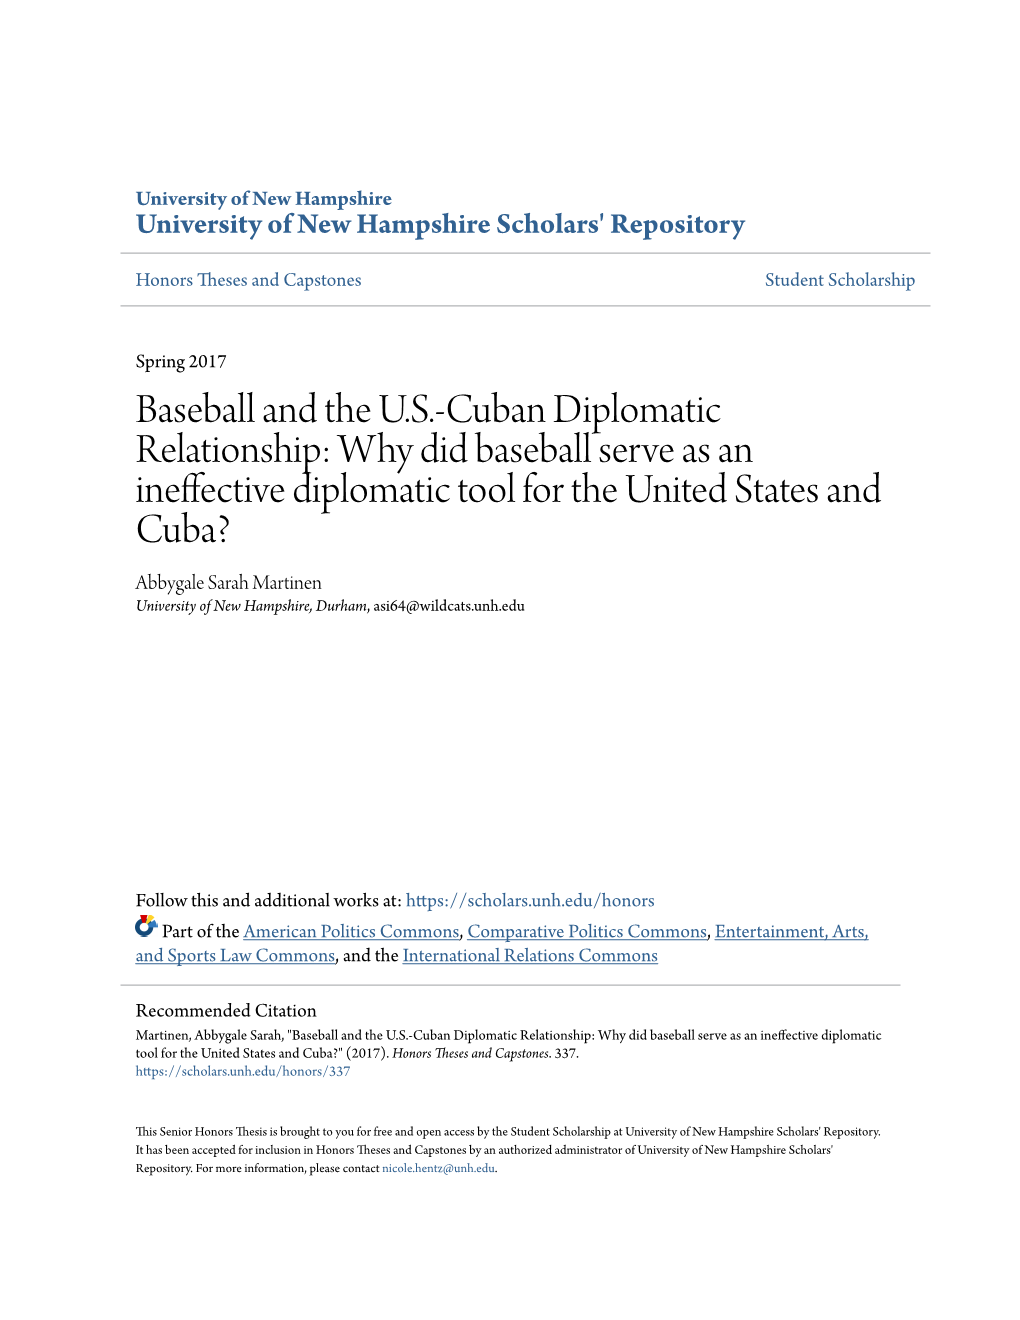 Baseball and the US-Cuban Diplomatic Relationship